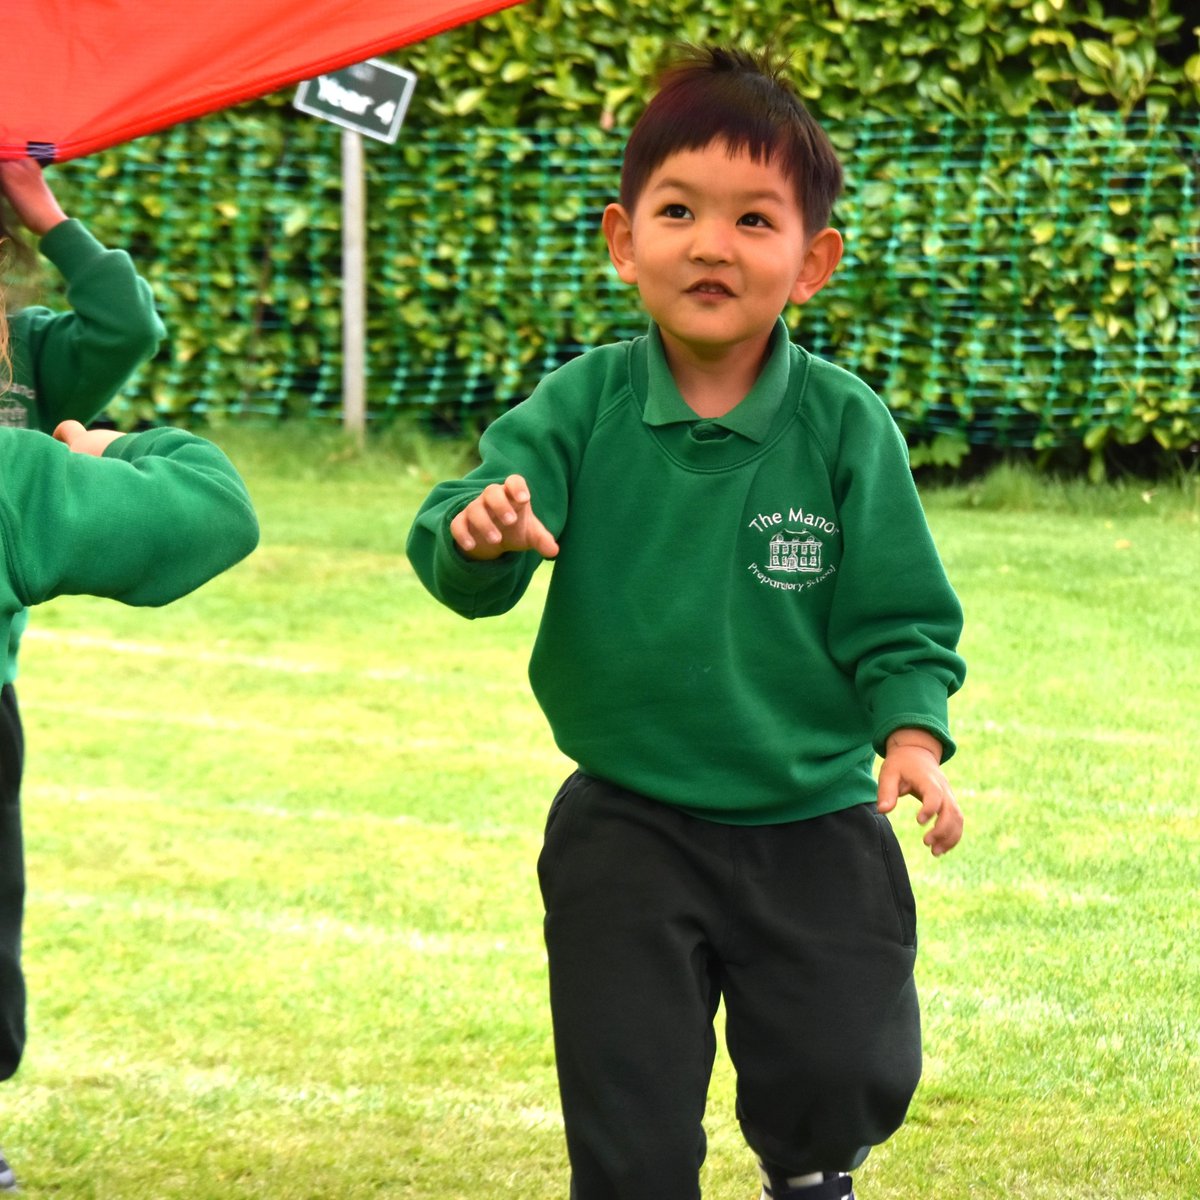 Nursery had a blast playing with a parachute!

#ManorPrep #independentschool #oxfordshire #earlyyears #nursery #play #learnthroughplay #fun